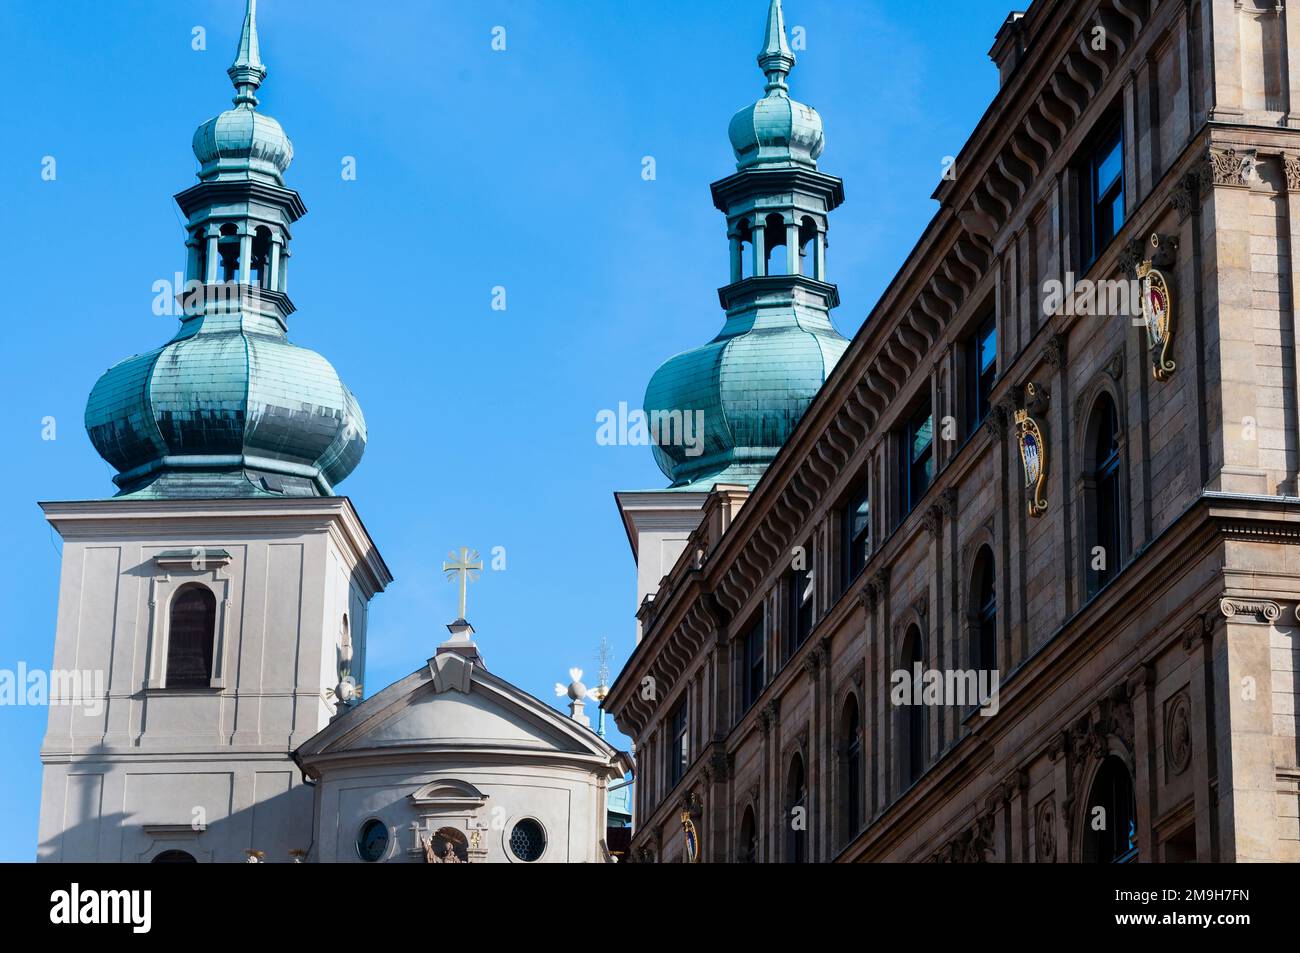 Towers of Church of Saint Gallen against blue sky, Prague, Czech Republic Stock Photo